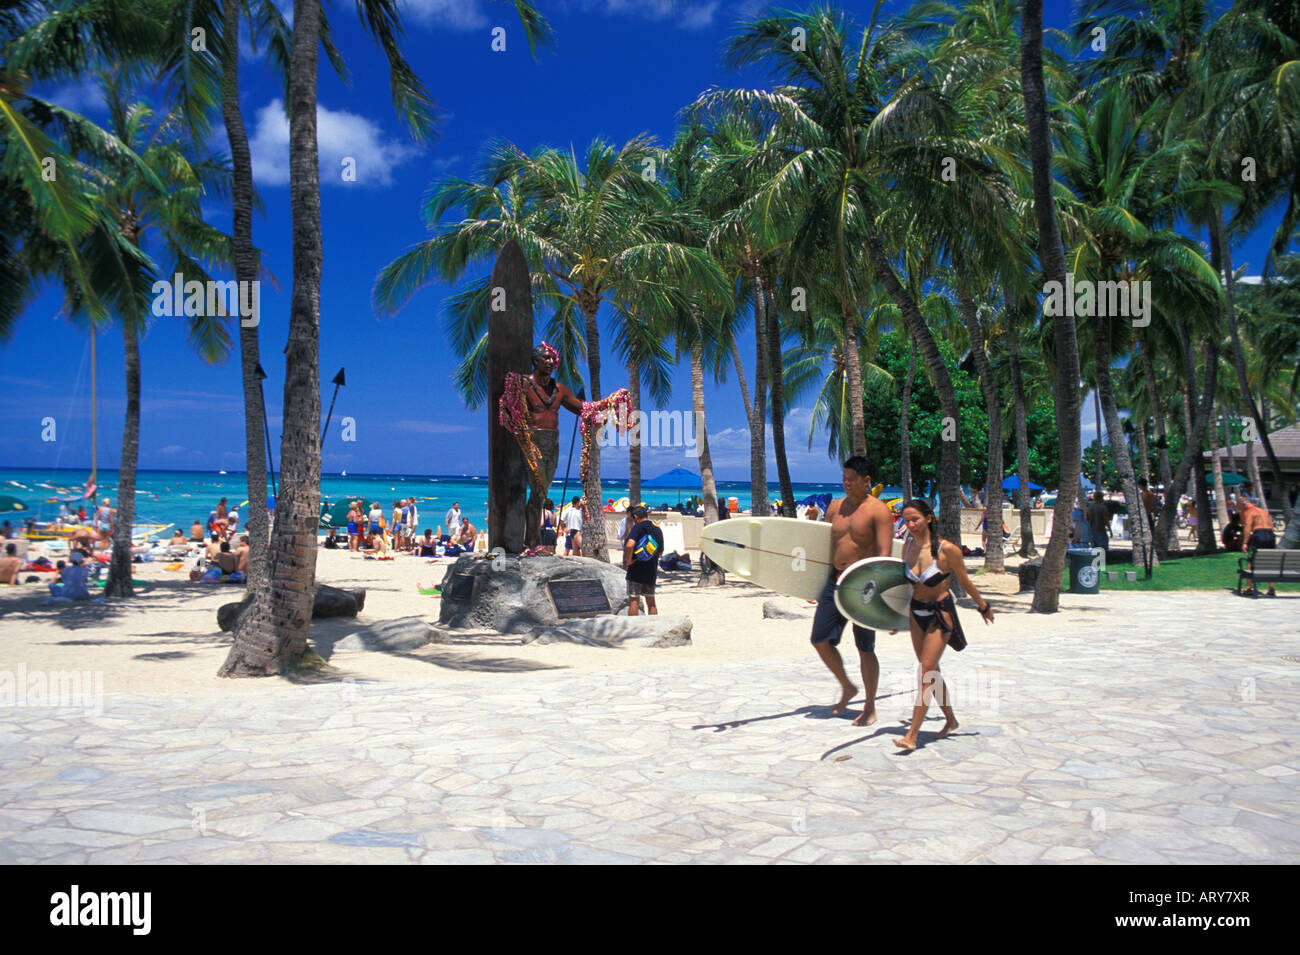 The statue of Hawaiian surfing legend Duke Kahanamoku stands in tribute along Kalakaua Ave near Waikiki Beach. Stock Photo